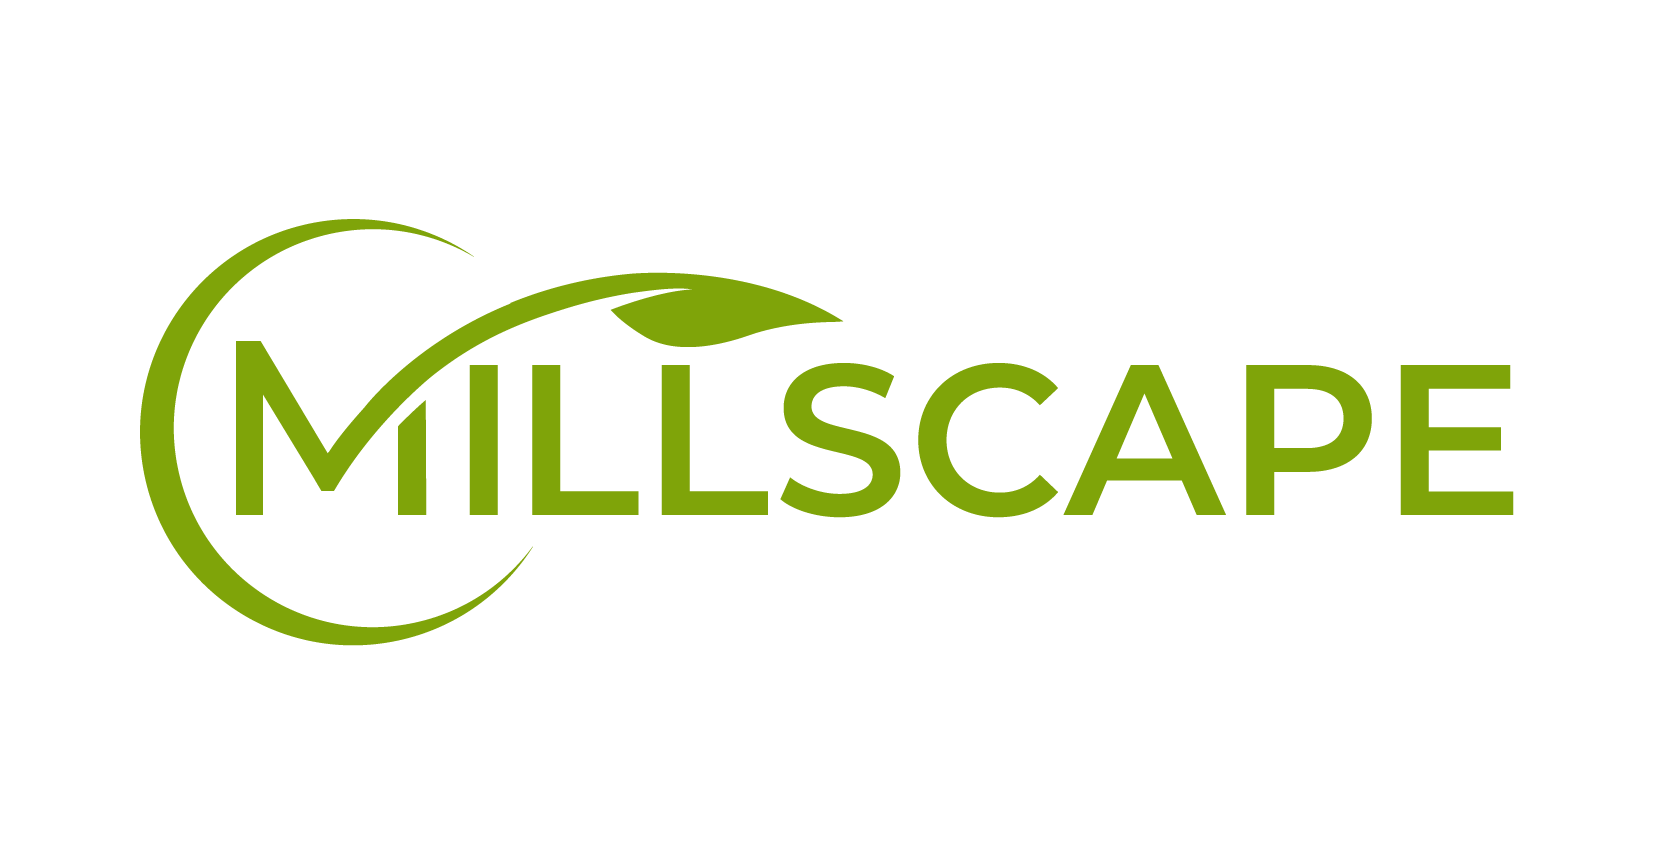 Millscape